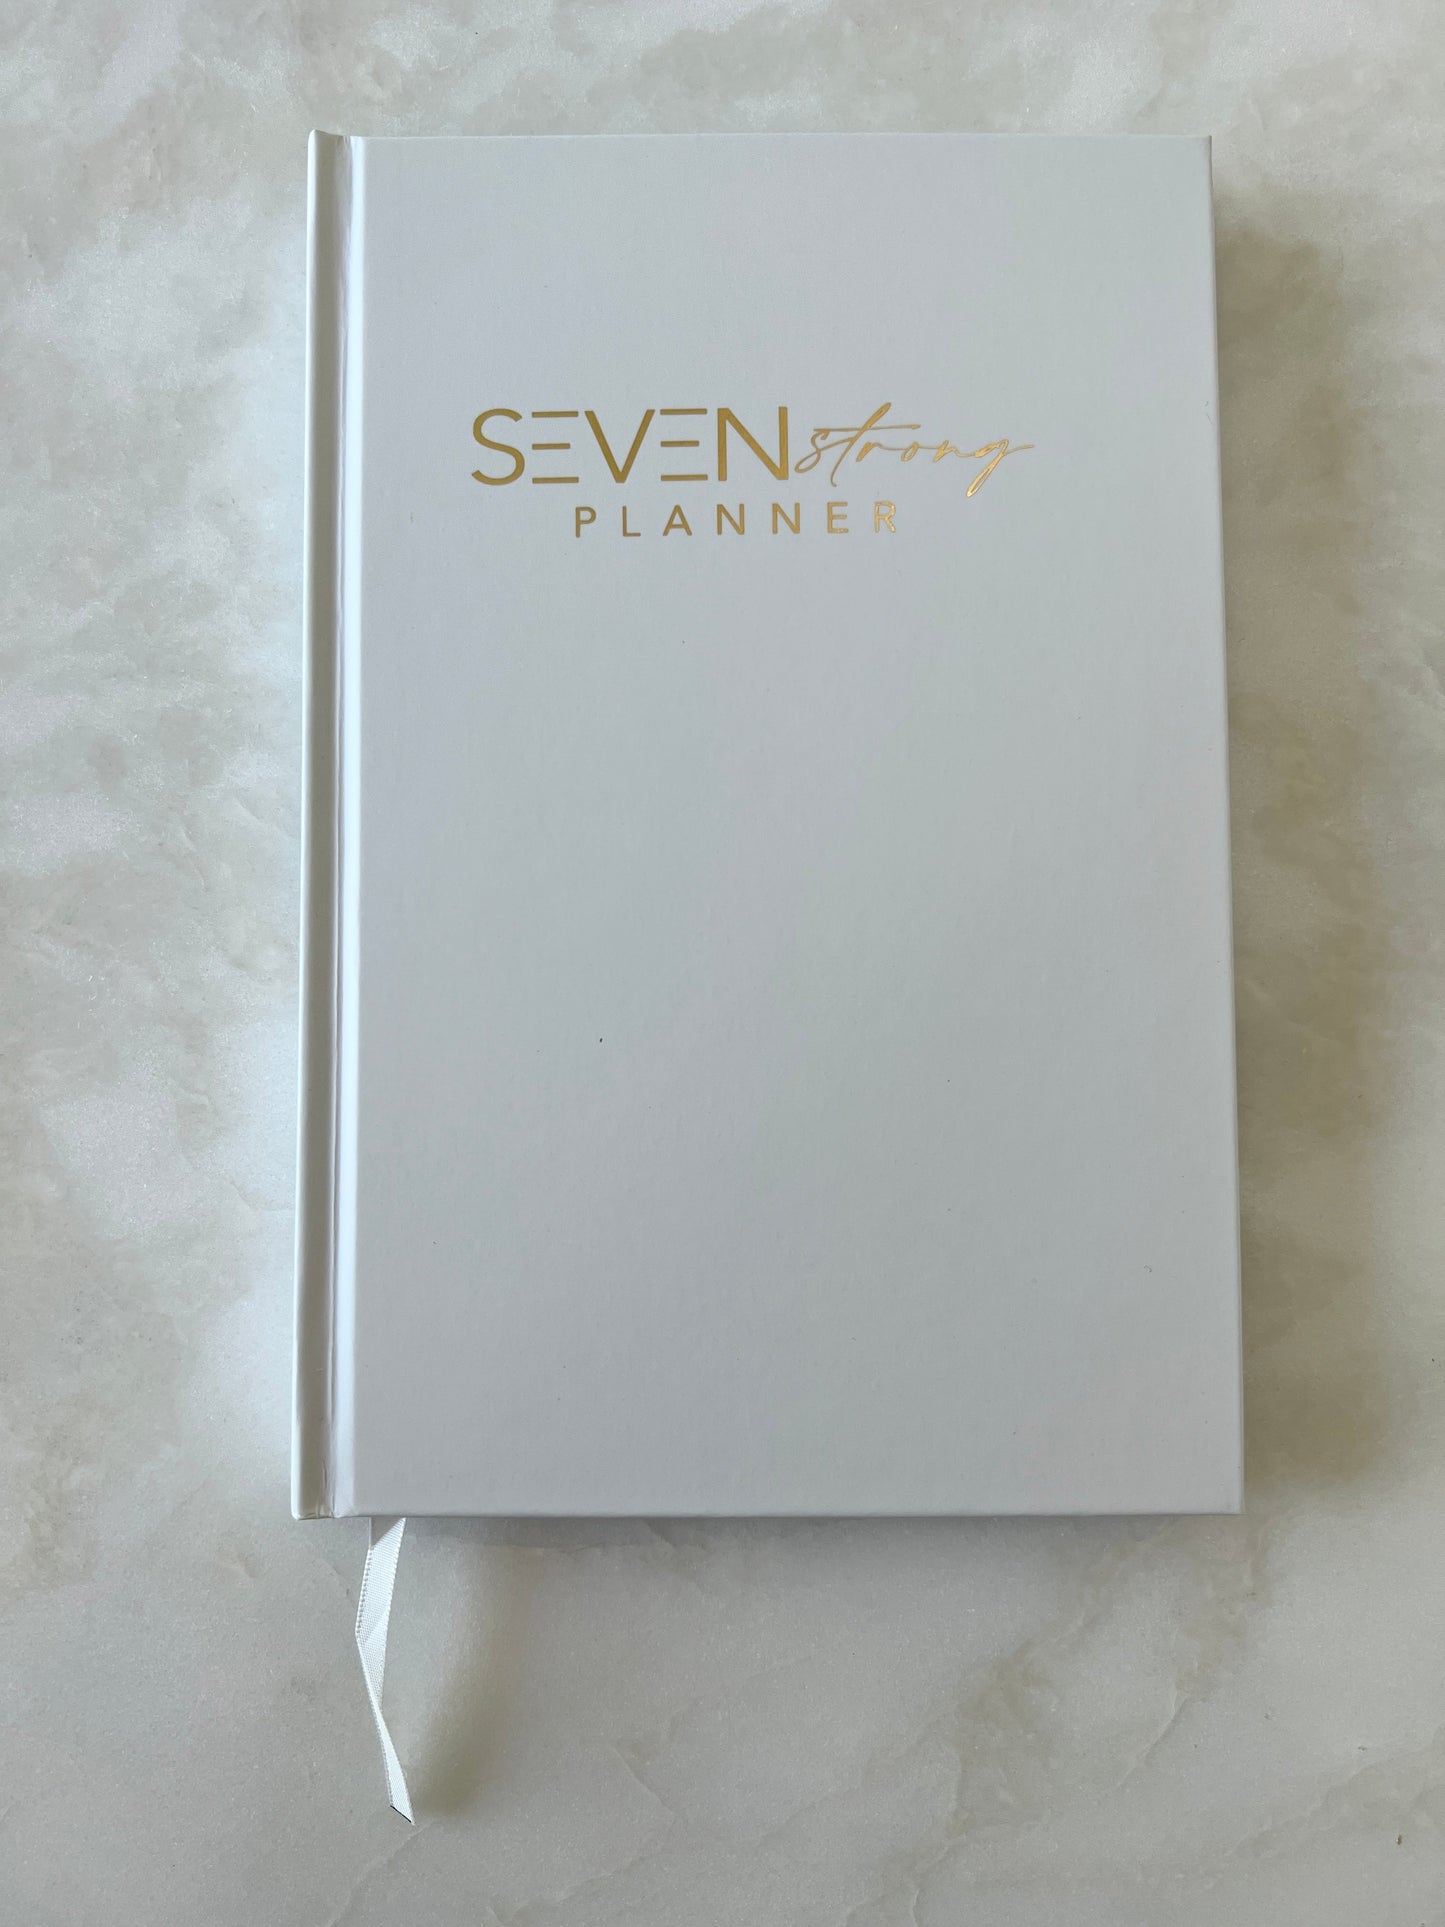 Seven Strong Planner - White